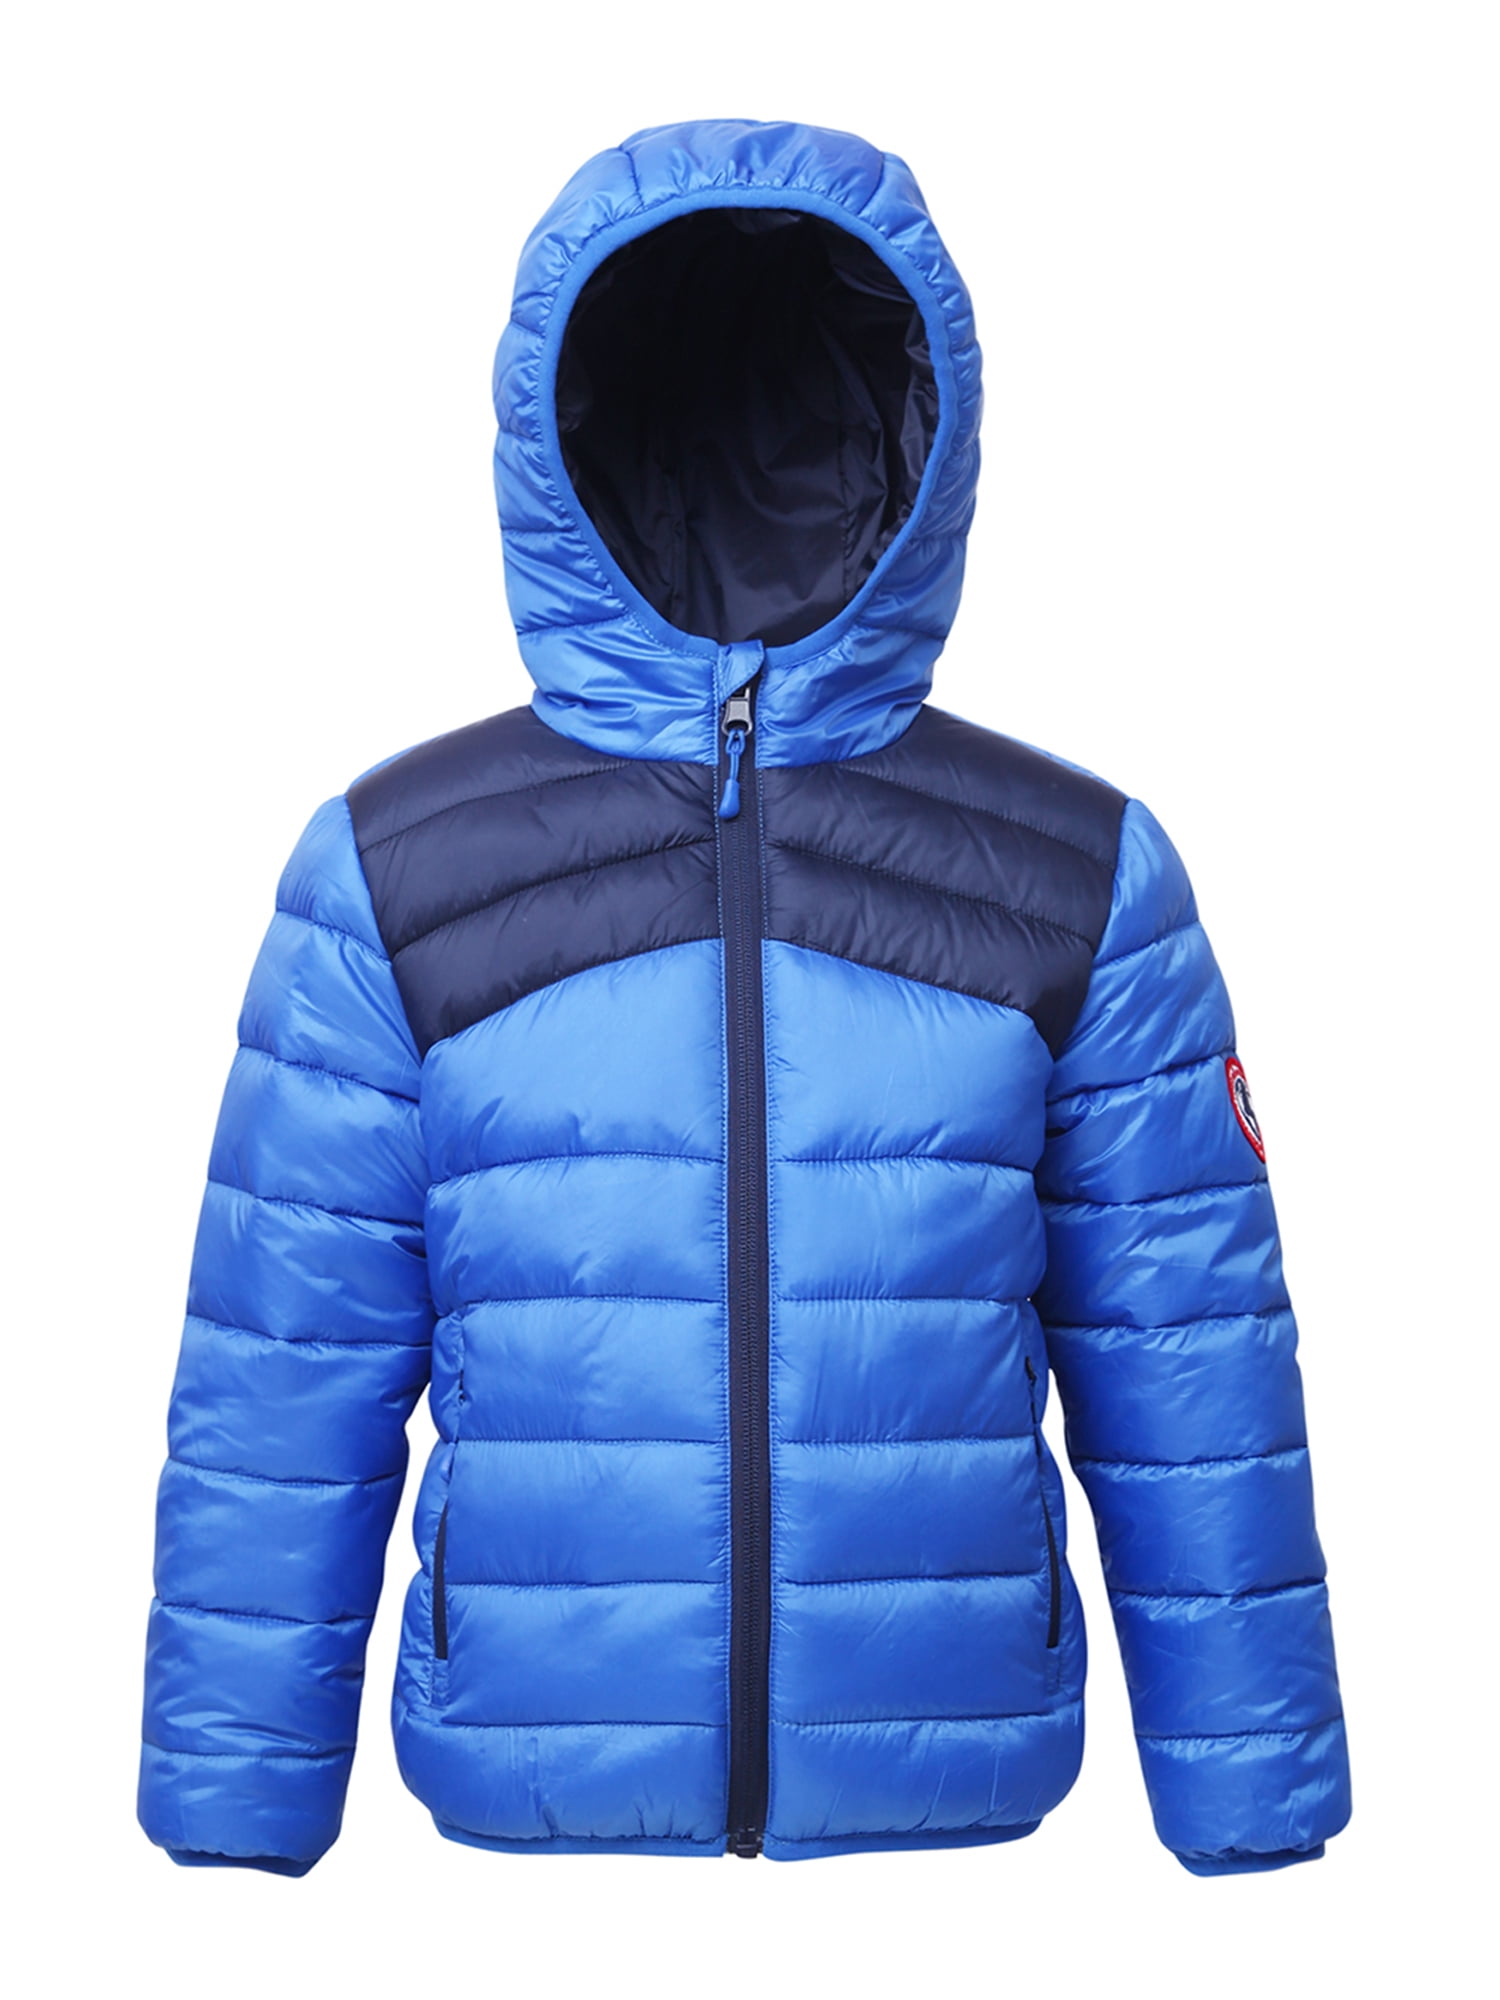 Coats Kids Jackets Outerwear Puffer jacket Heather Blue Bubble coats 4/5-18XXL 